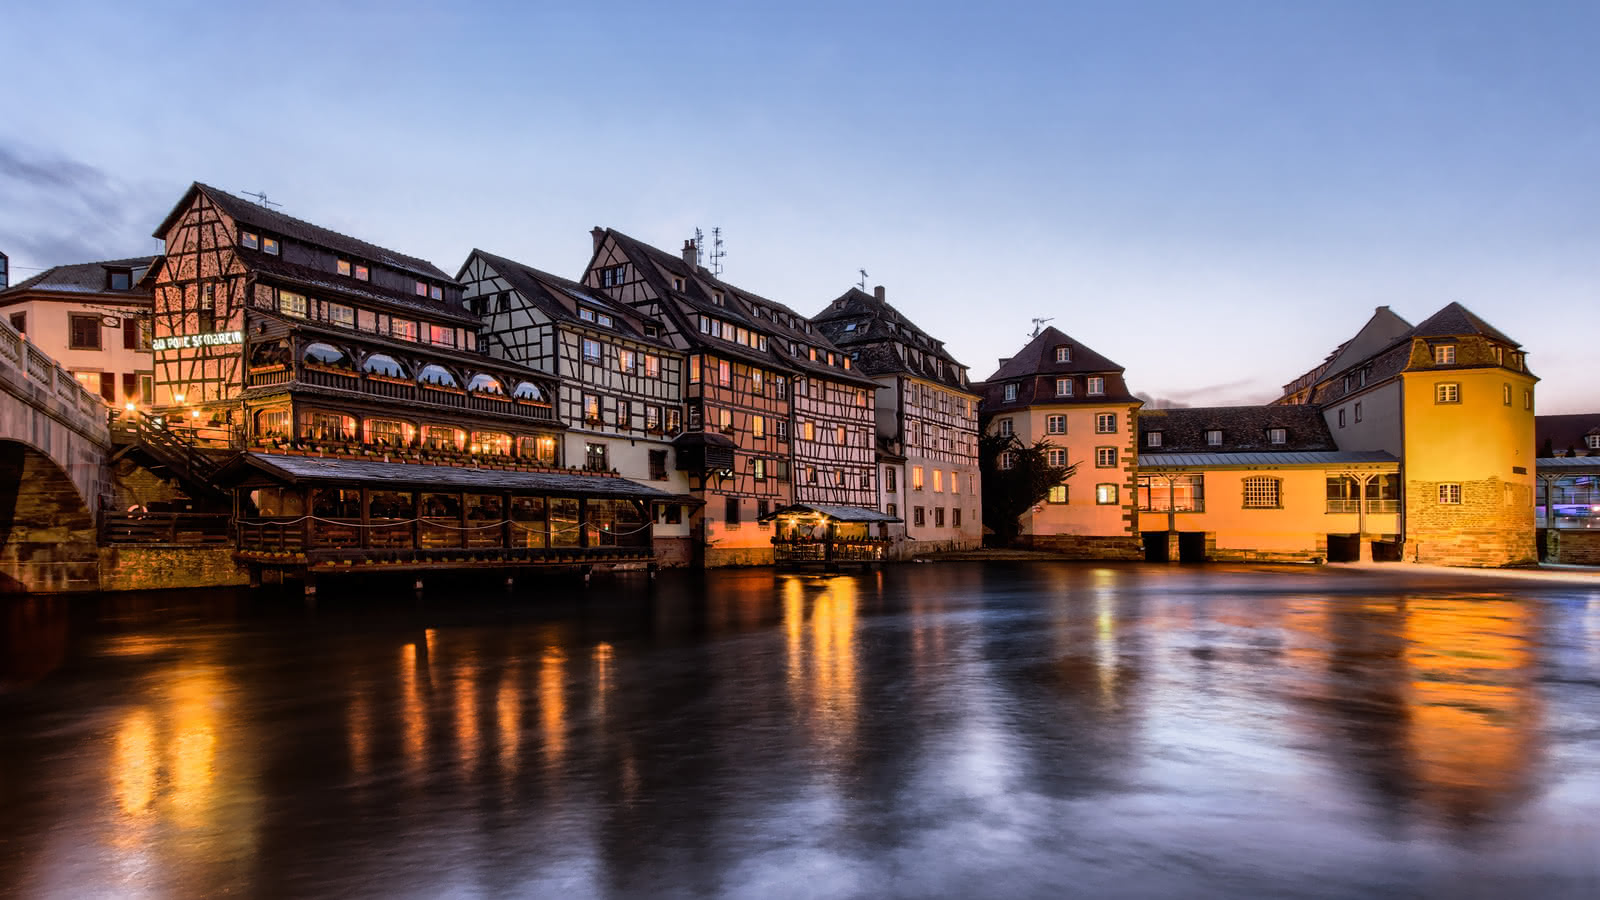 Homepage - Visit Alsace